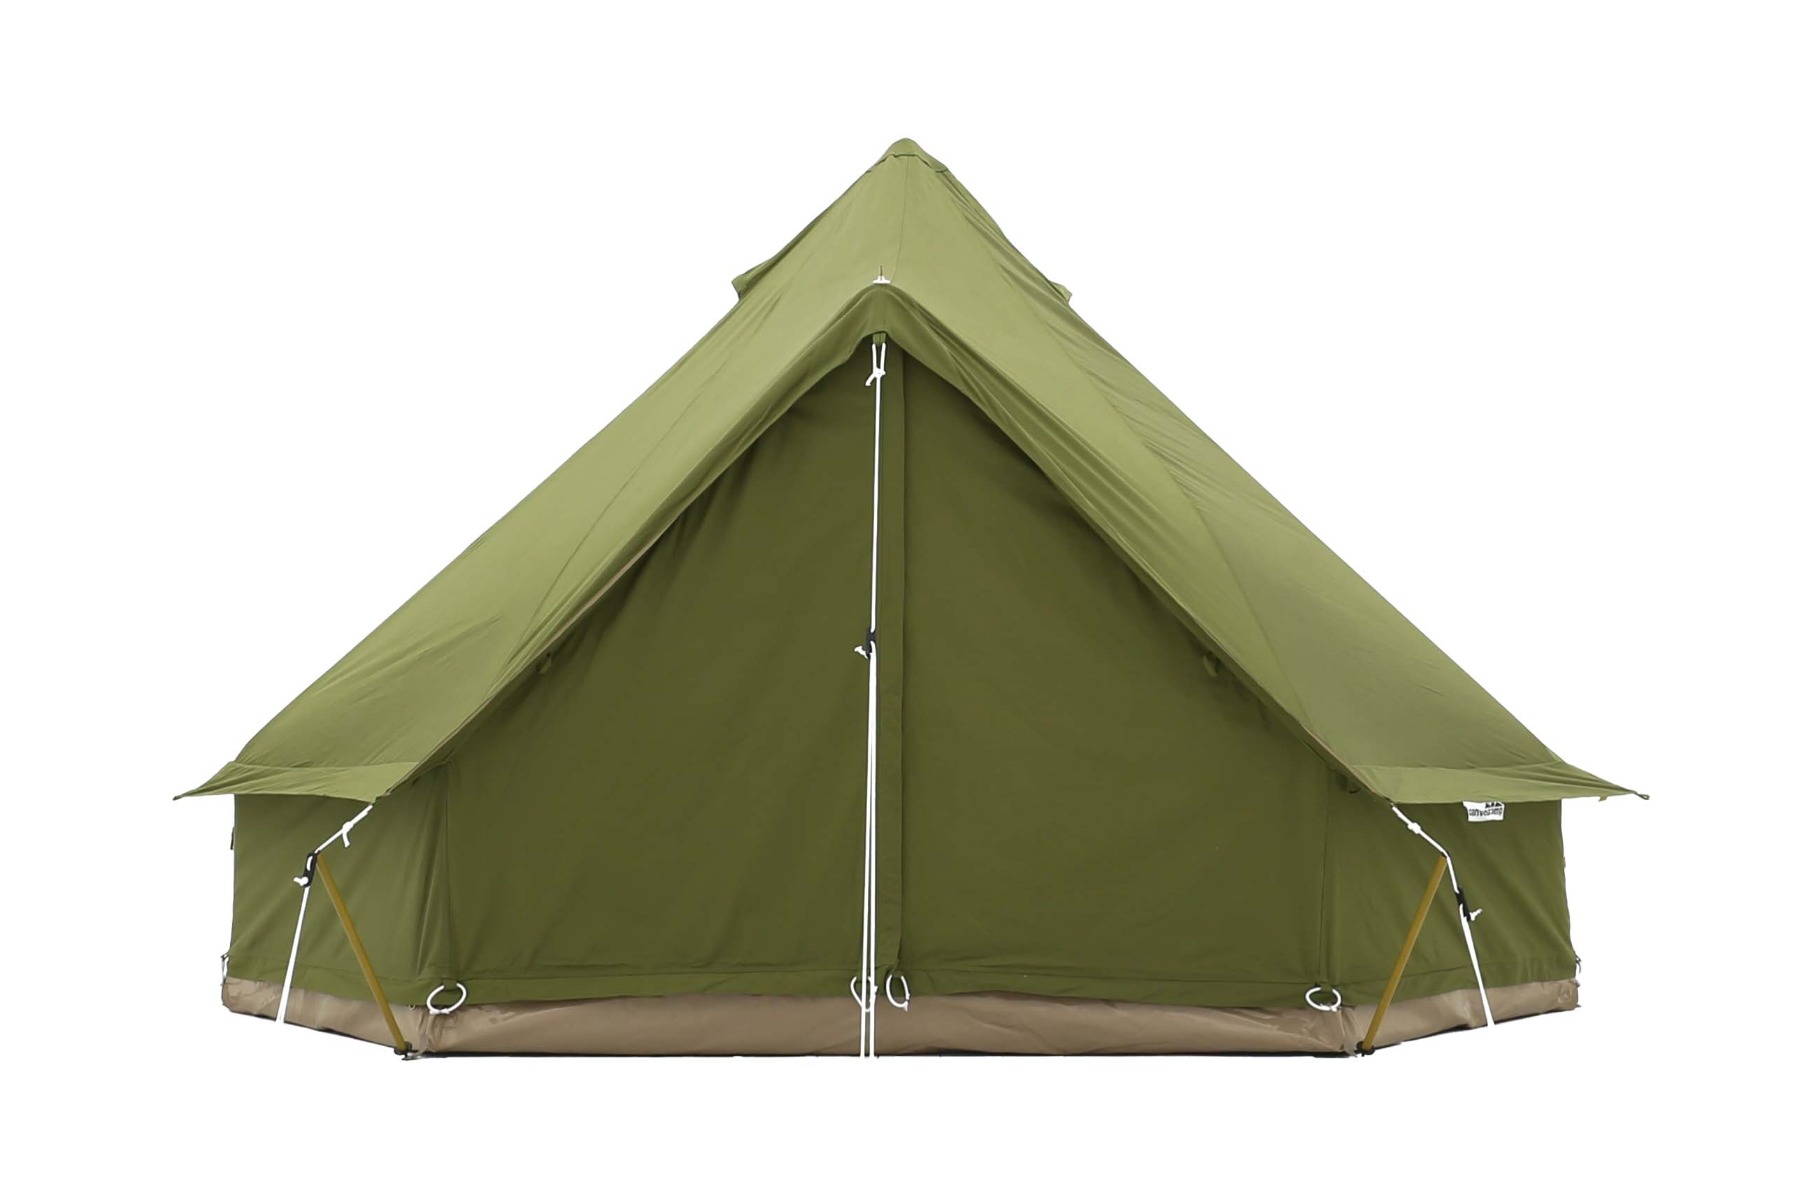 Tent Repair Kit Eyelet Eyelets Tarpaulin Canvas Woven Sheet Plastic Tents easy 